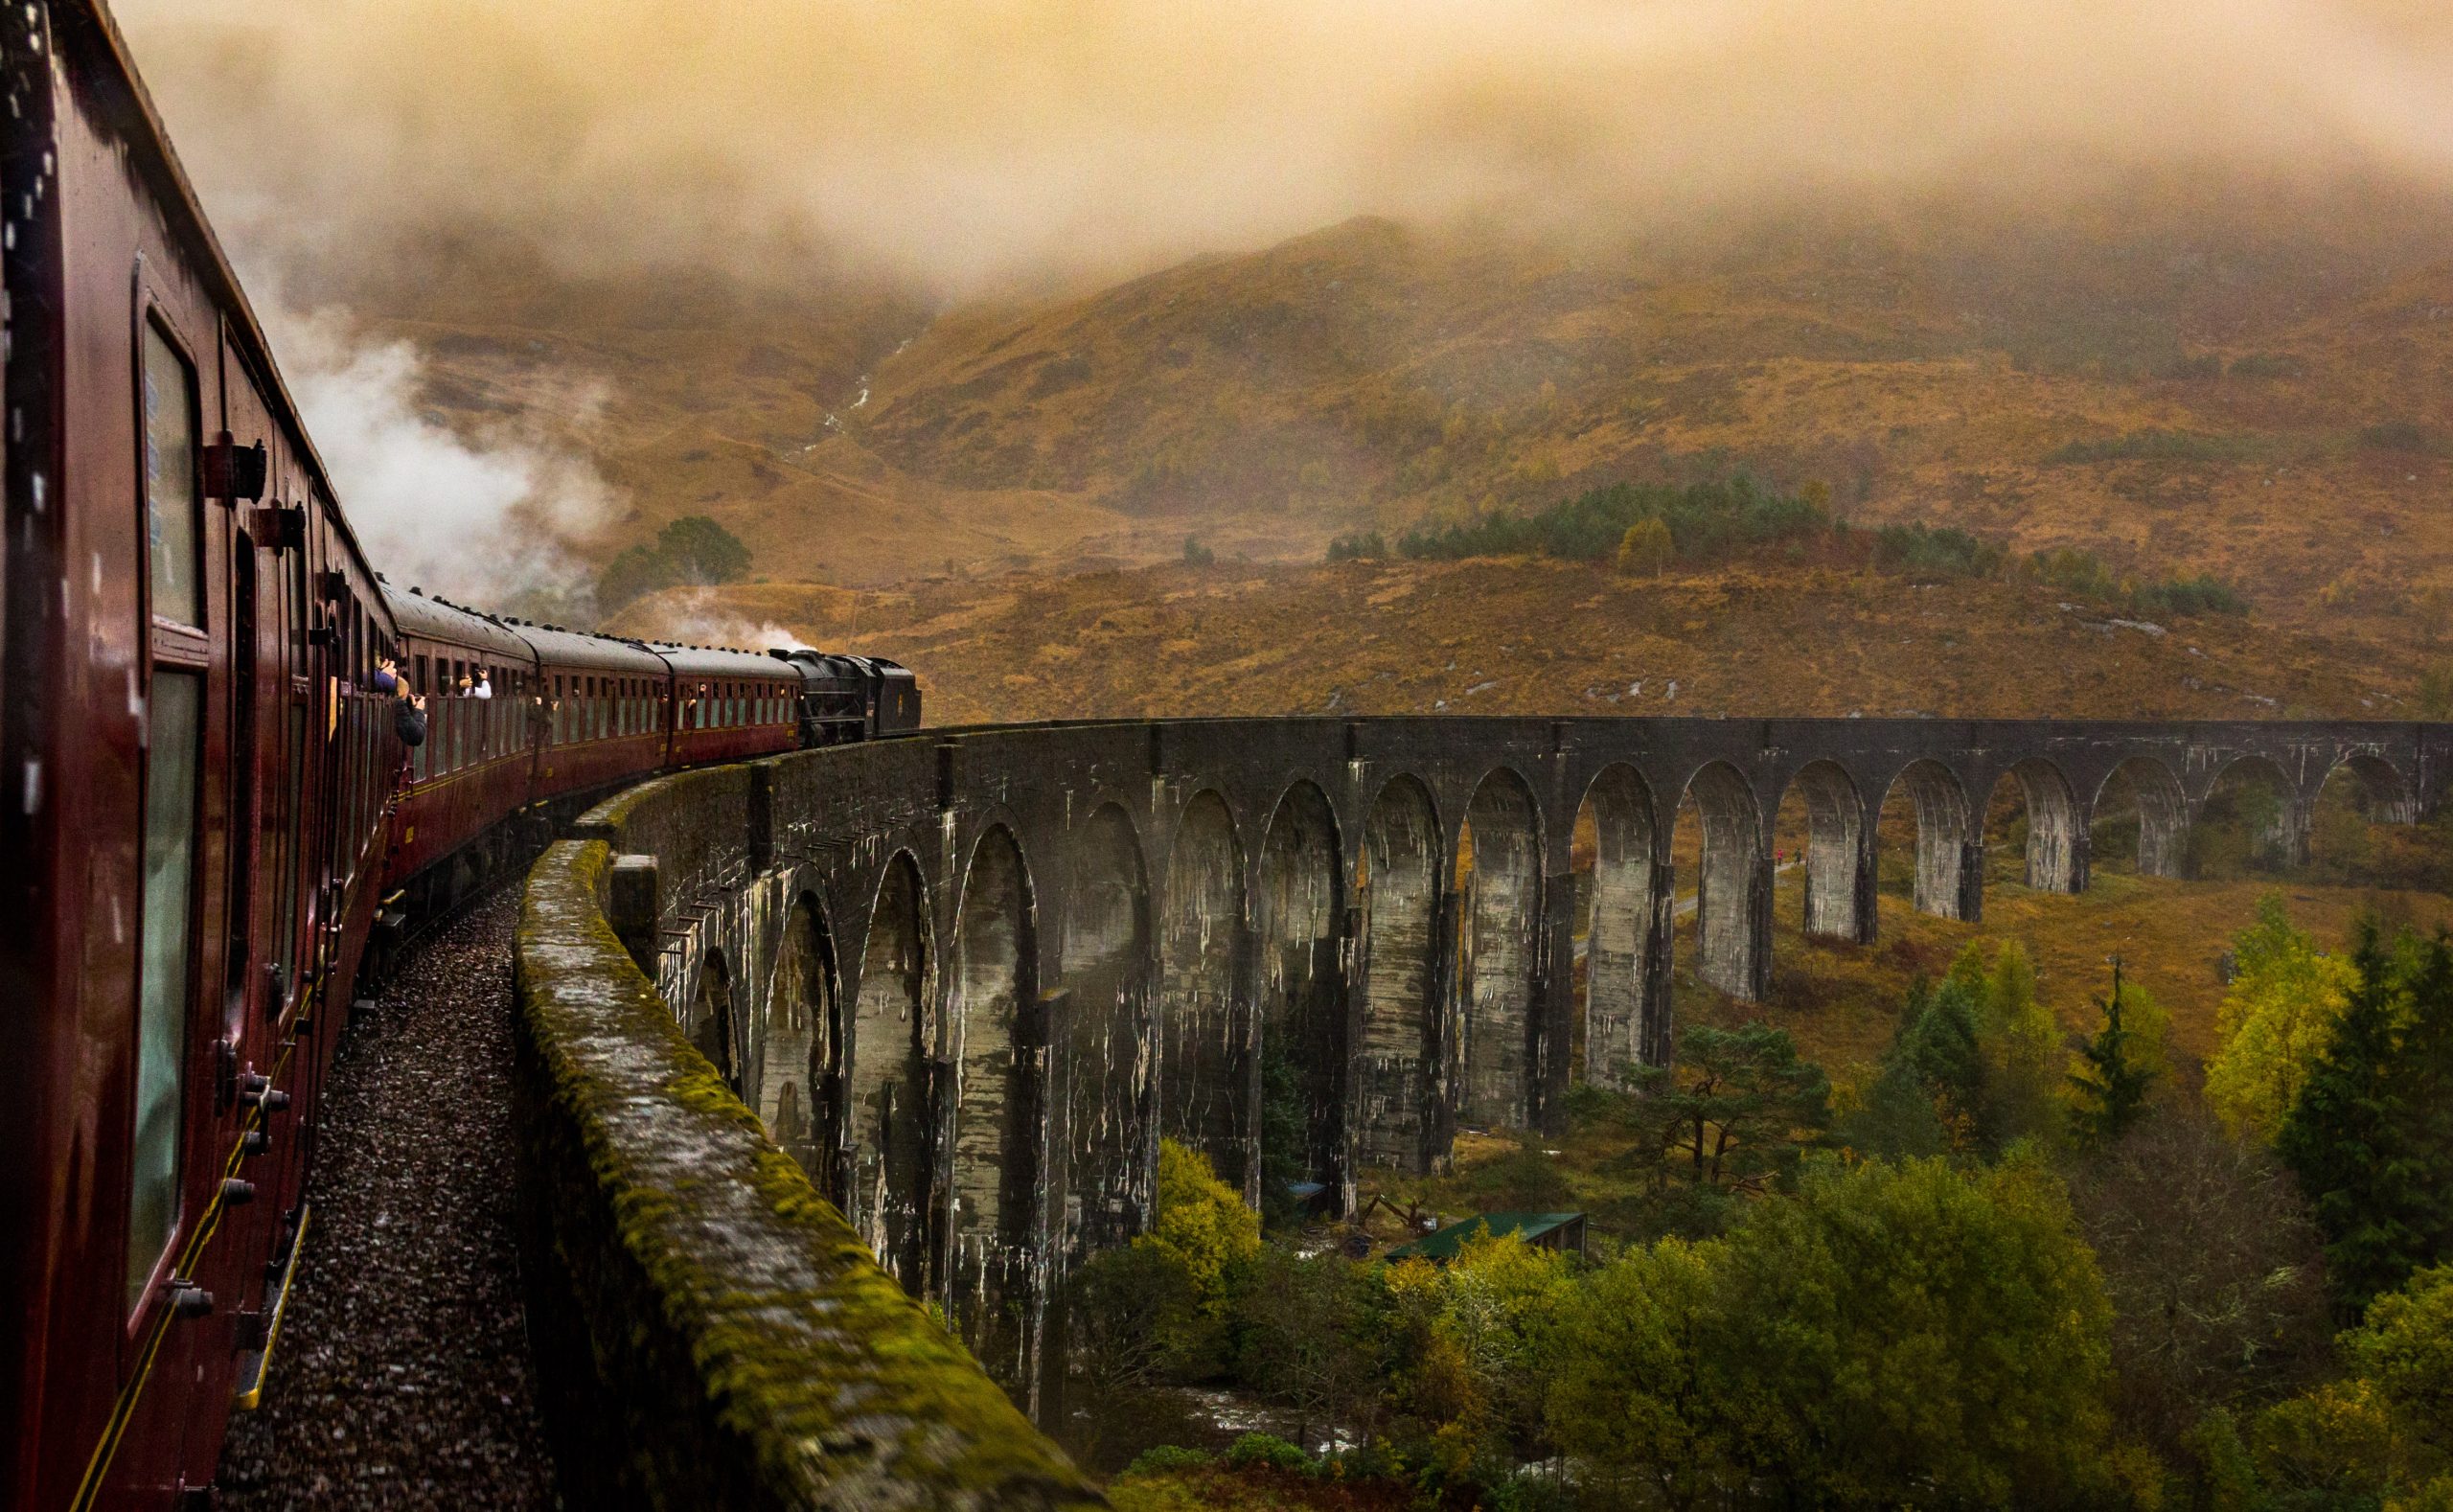 Hogwarts Express Steam train